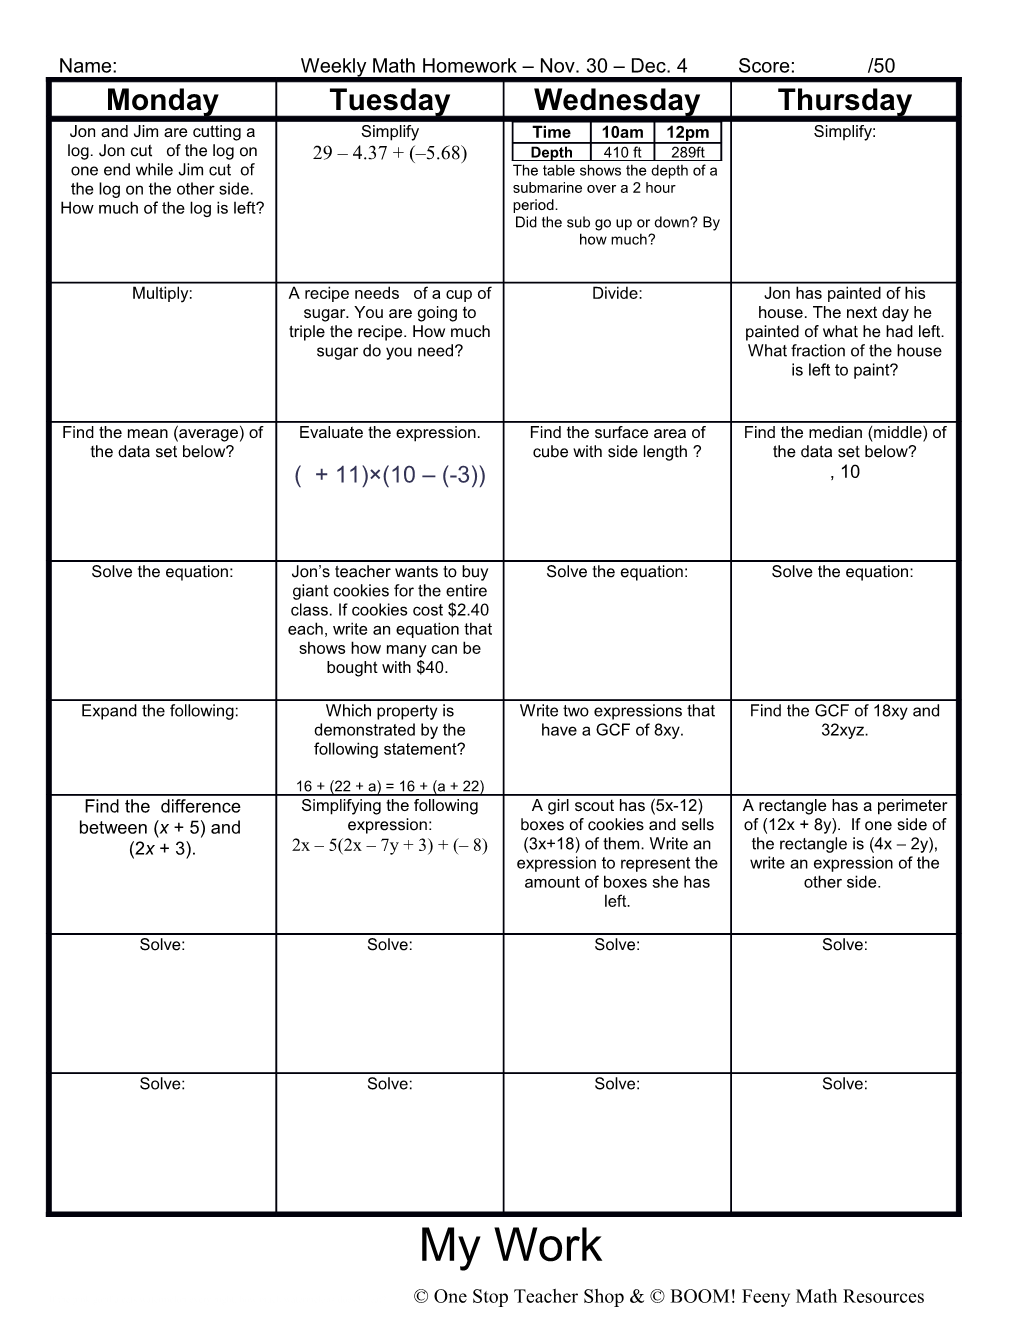 Weekly Homework Sheet s1